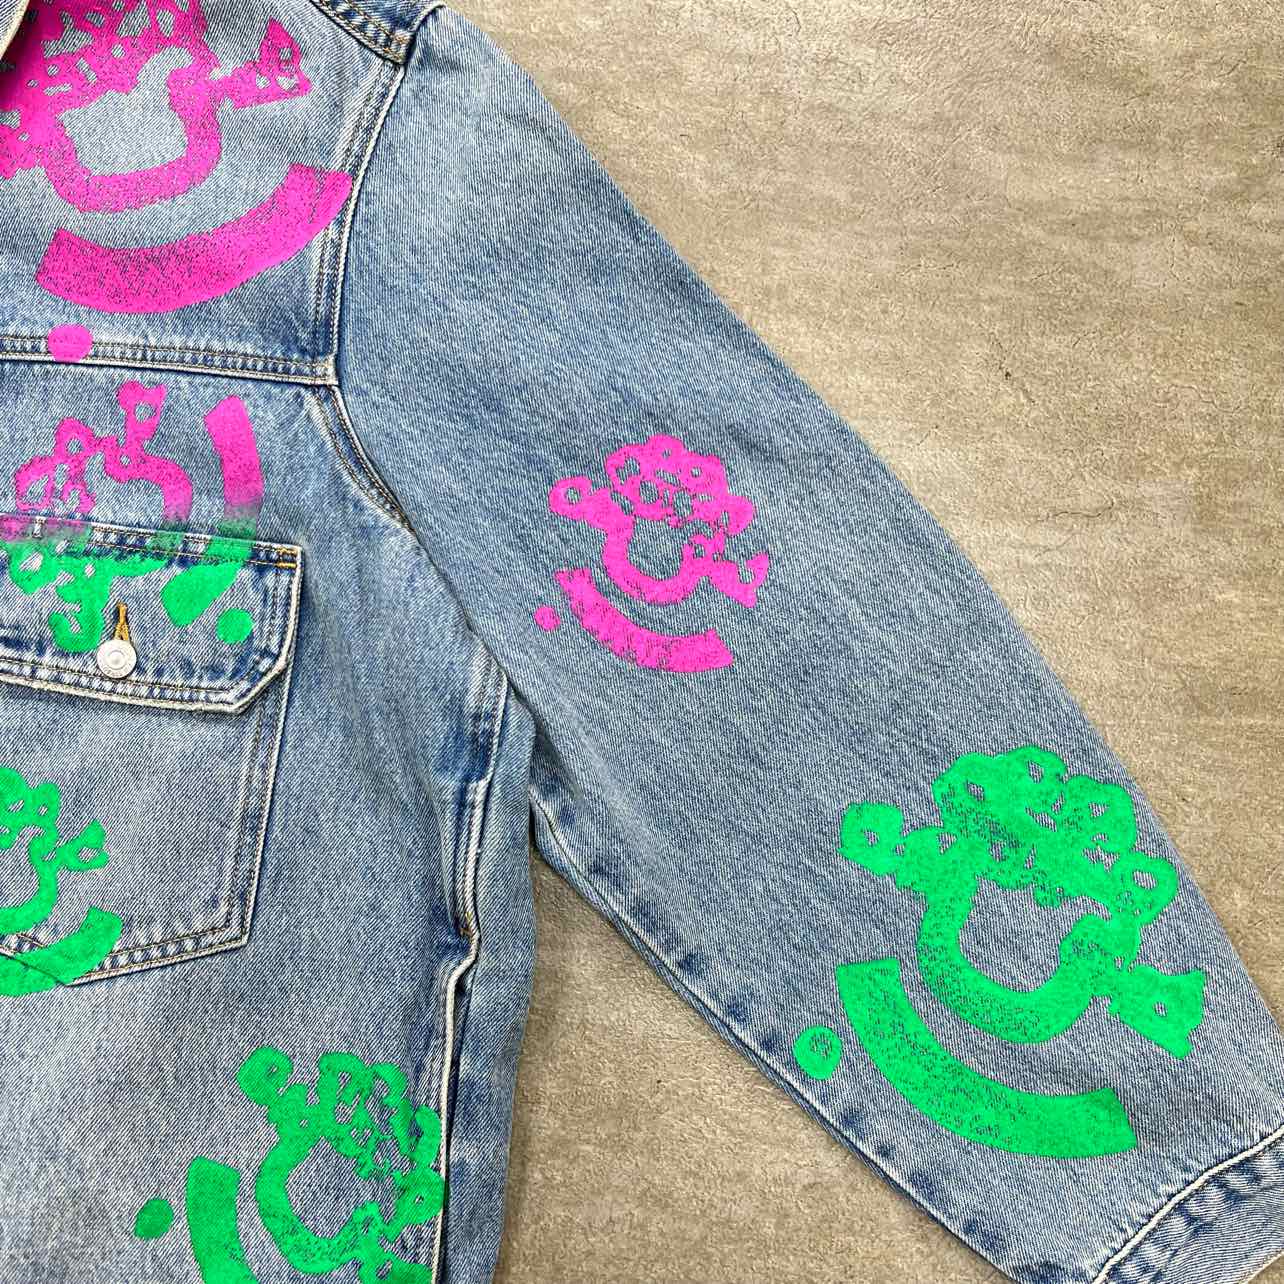 Denim Tears Jacket "BSTROY TEARS" Pink/Green Used Size 2XL